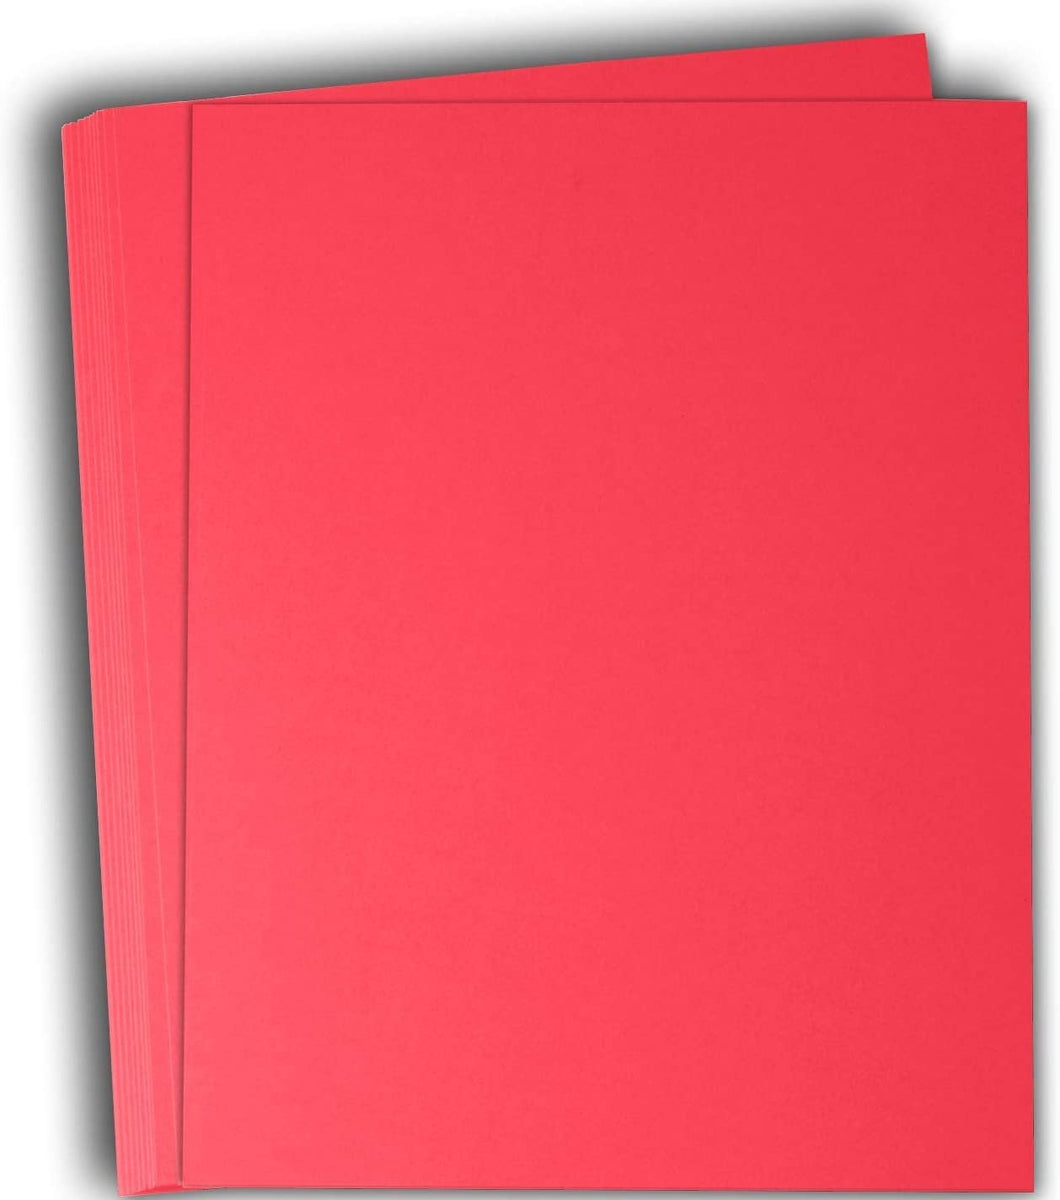 Hamilco Colored Cardstock Scrapbook Paper 8.5 x 11 Bubble Gum Pink C –